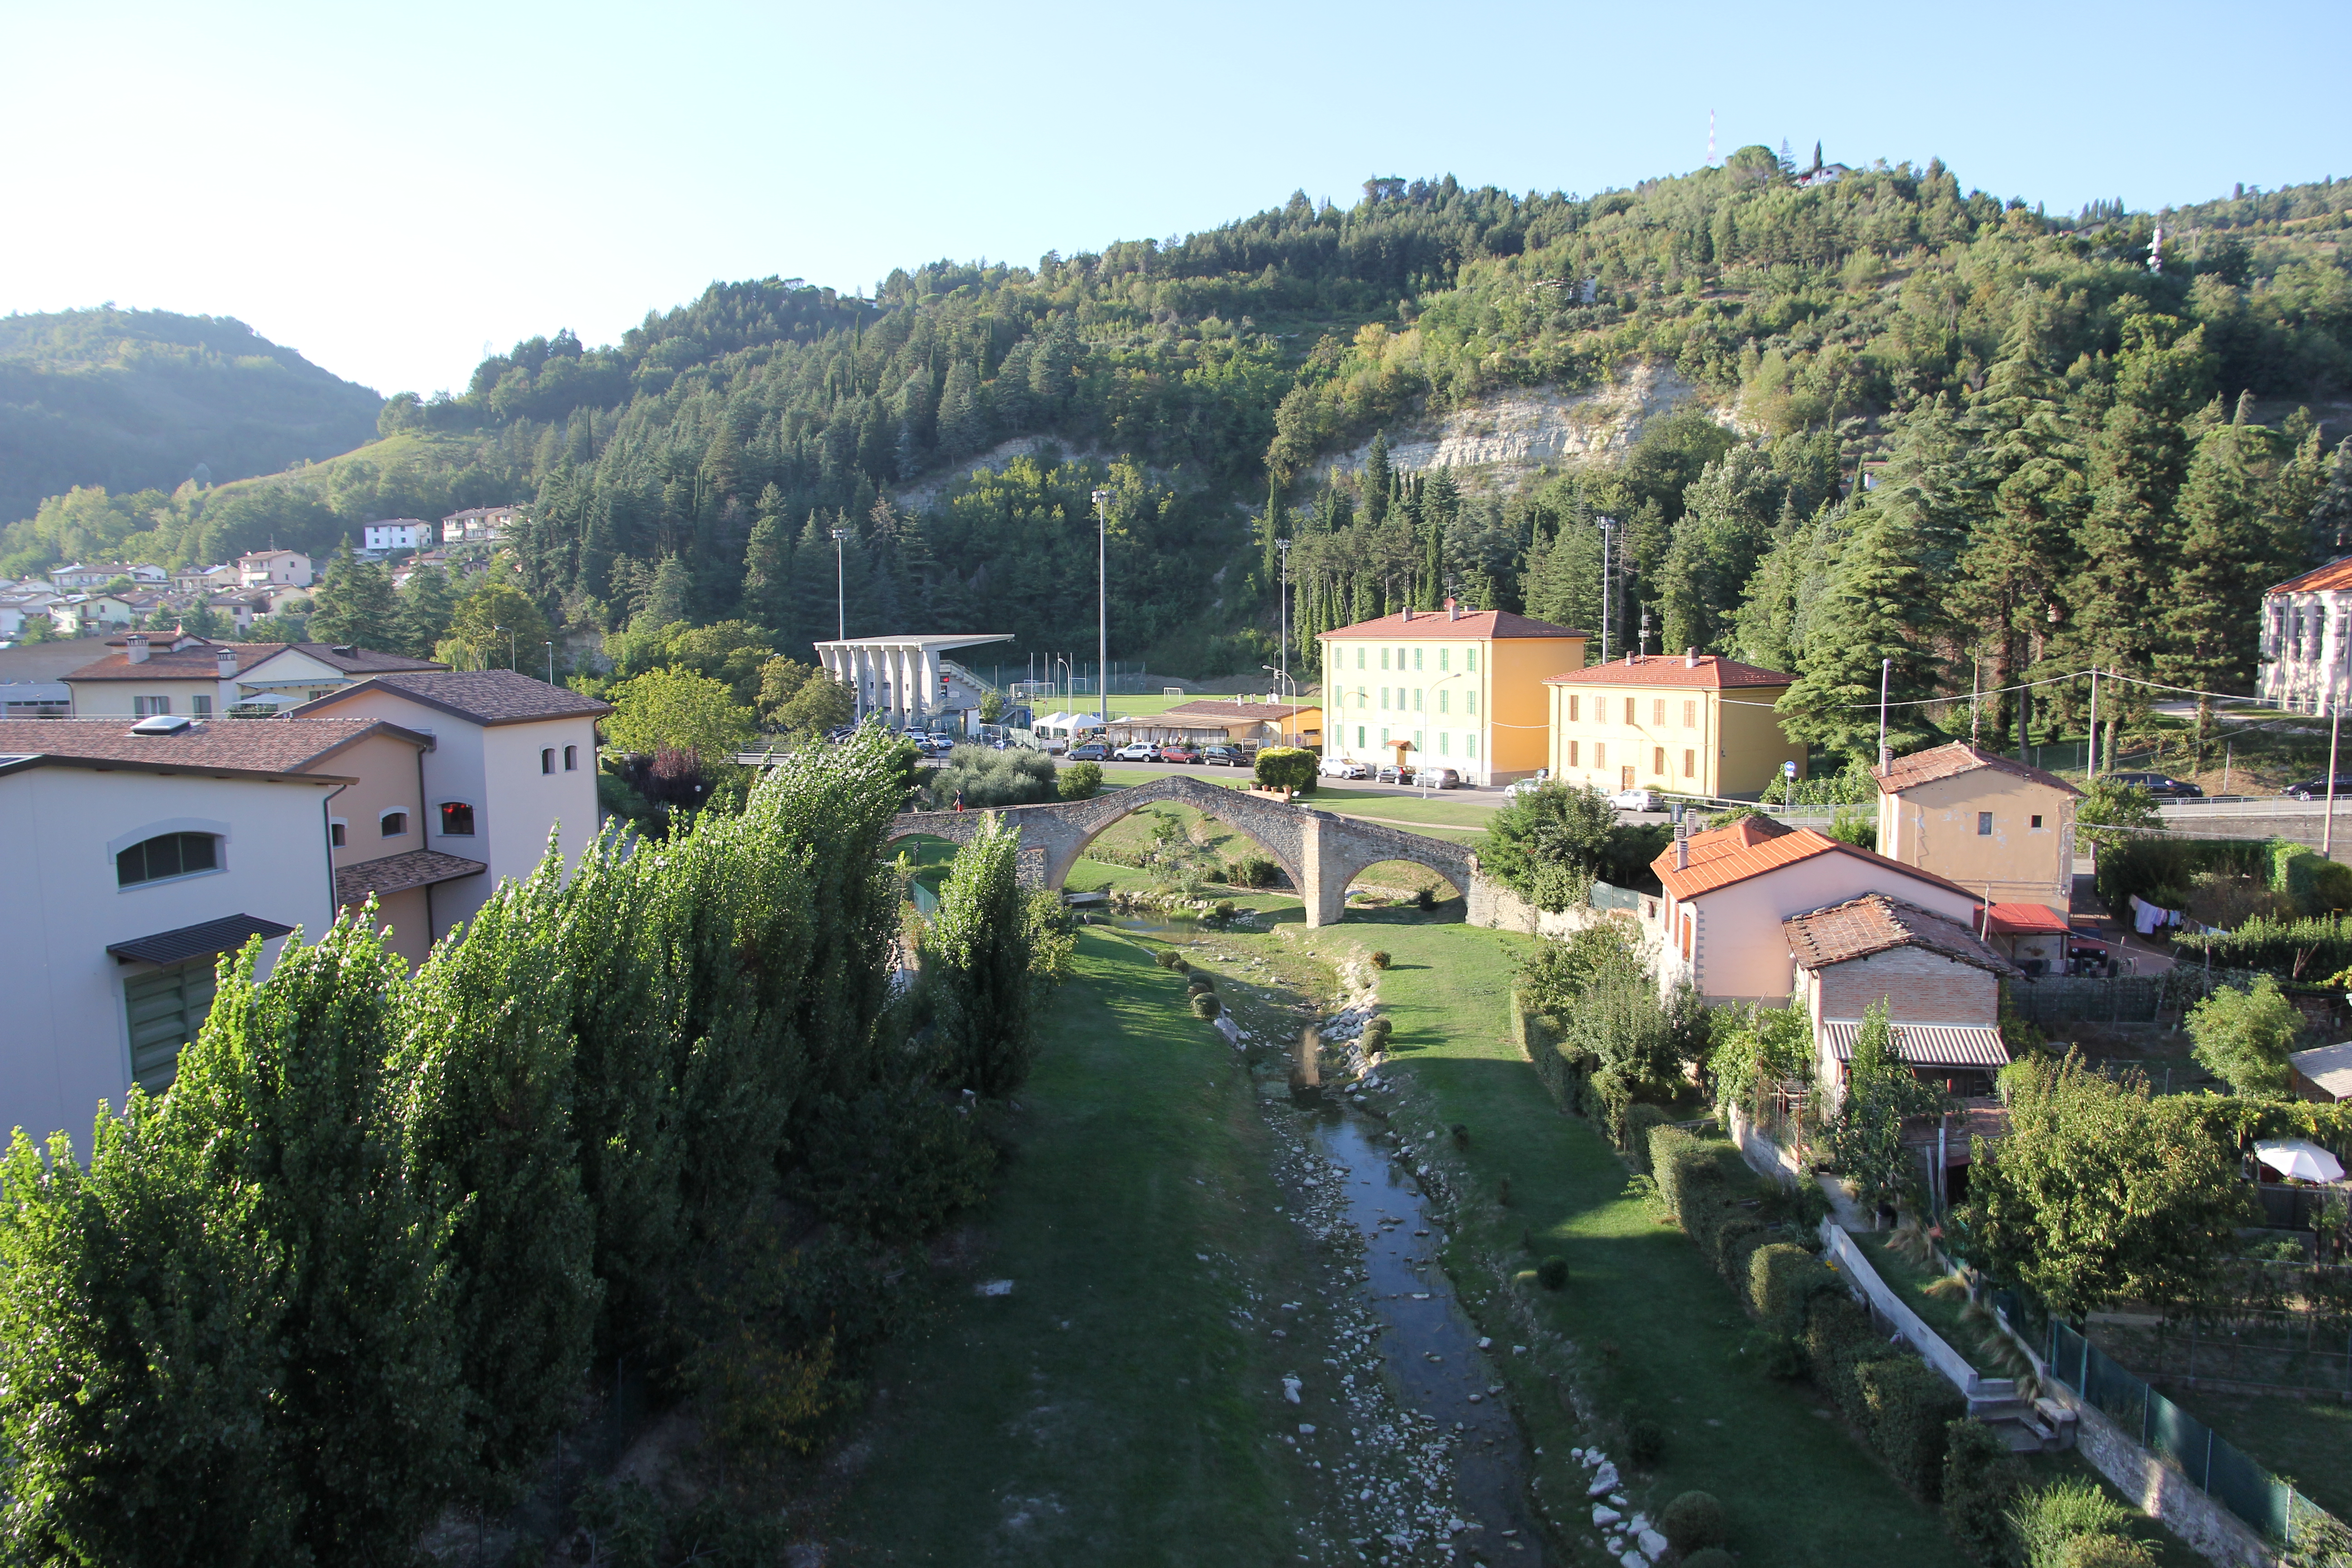 photo: https://upload.wikimedia.org/wikipedia/commons/0/0d/Modigliana%2C_ponte_di_San_Donato_%2802%29.jpg